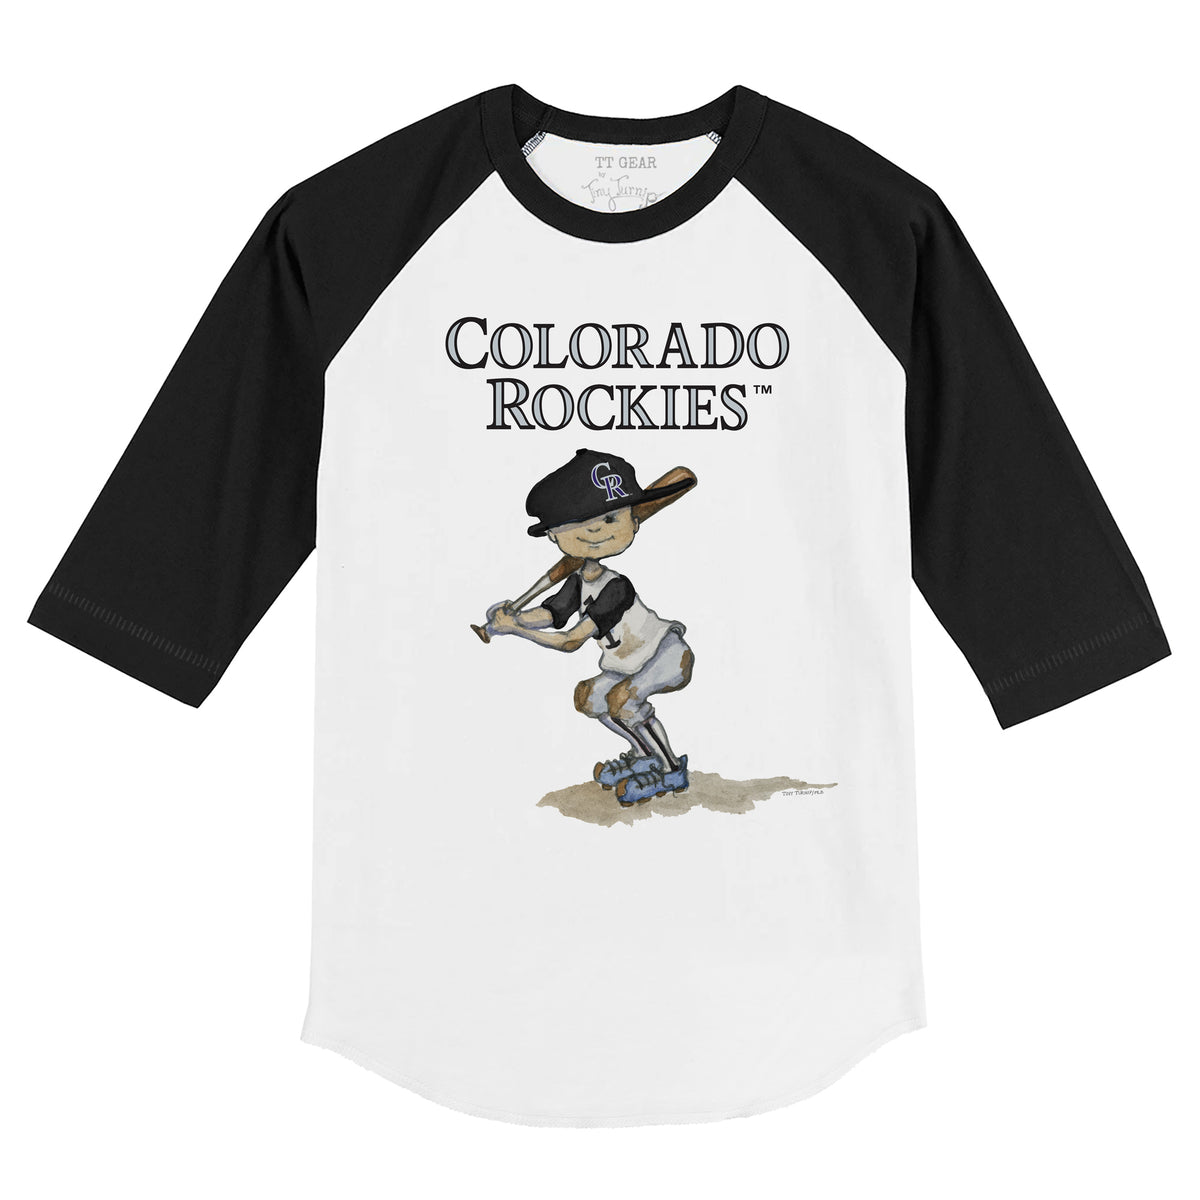 MLB Colorado Rockies Infant Boys' Pullover Jersey - 12M